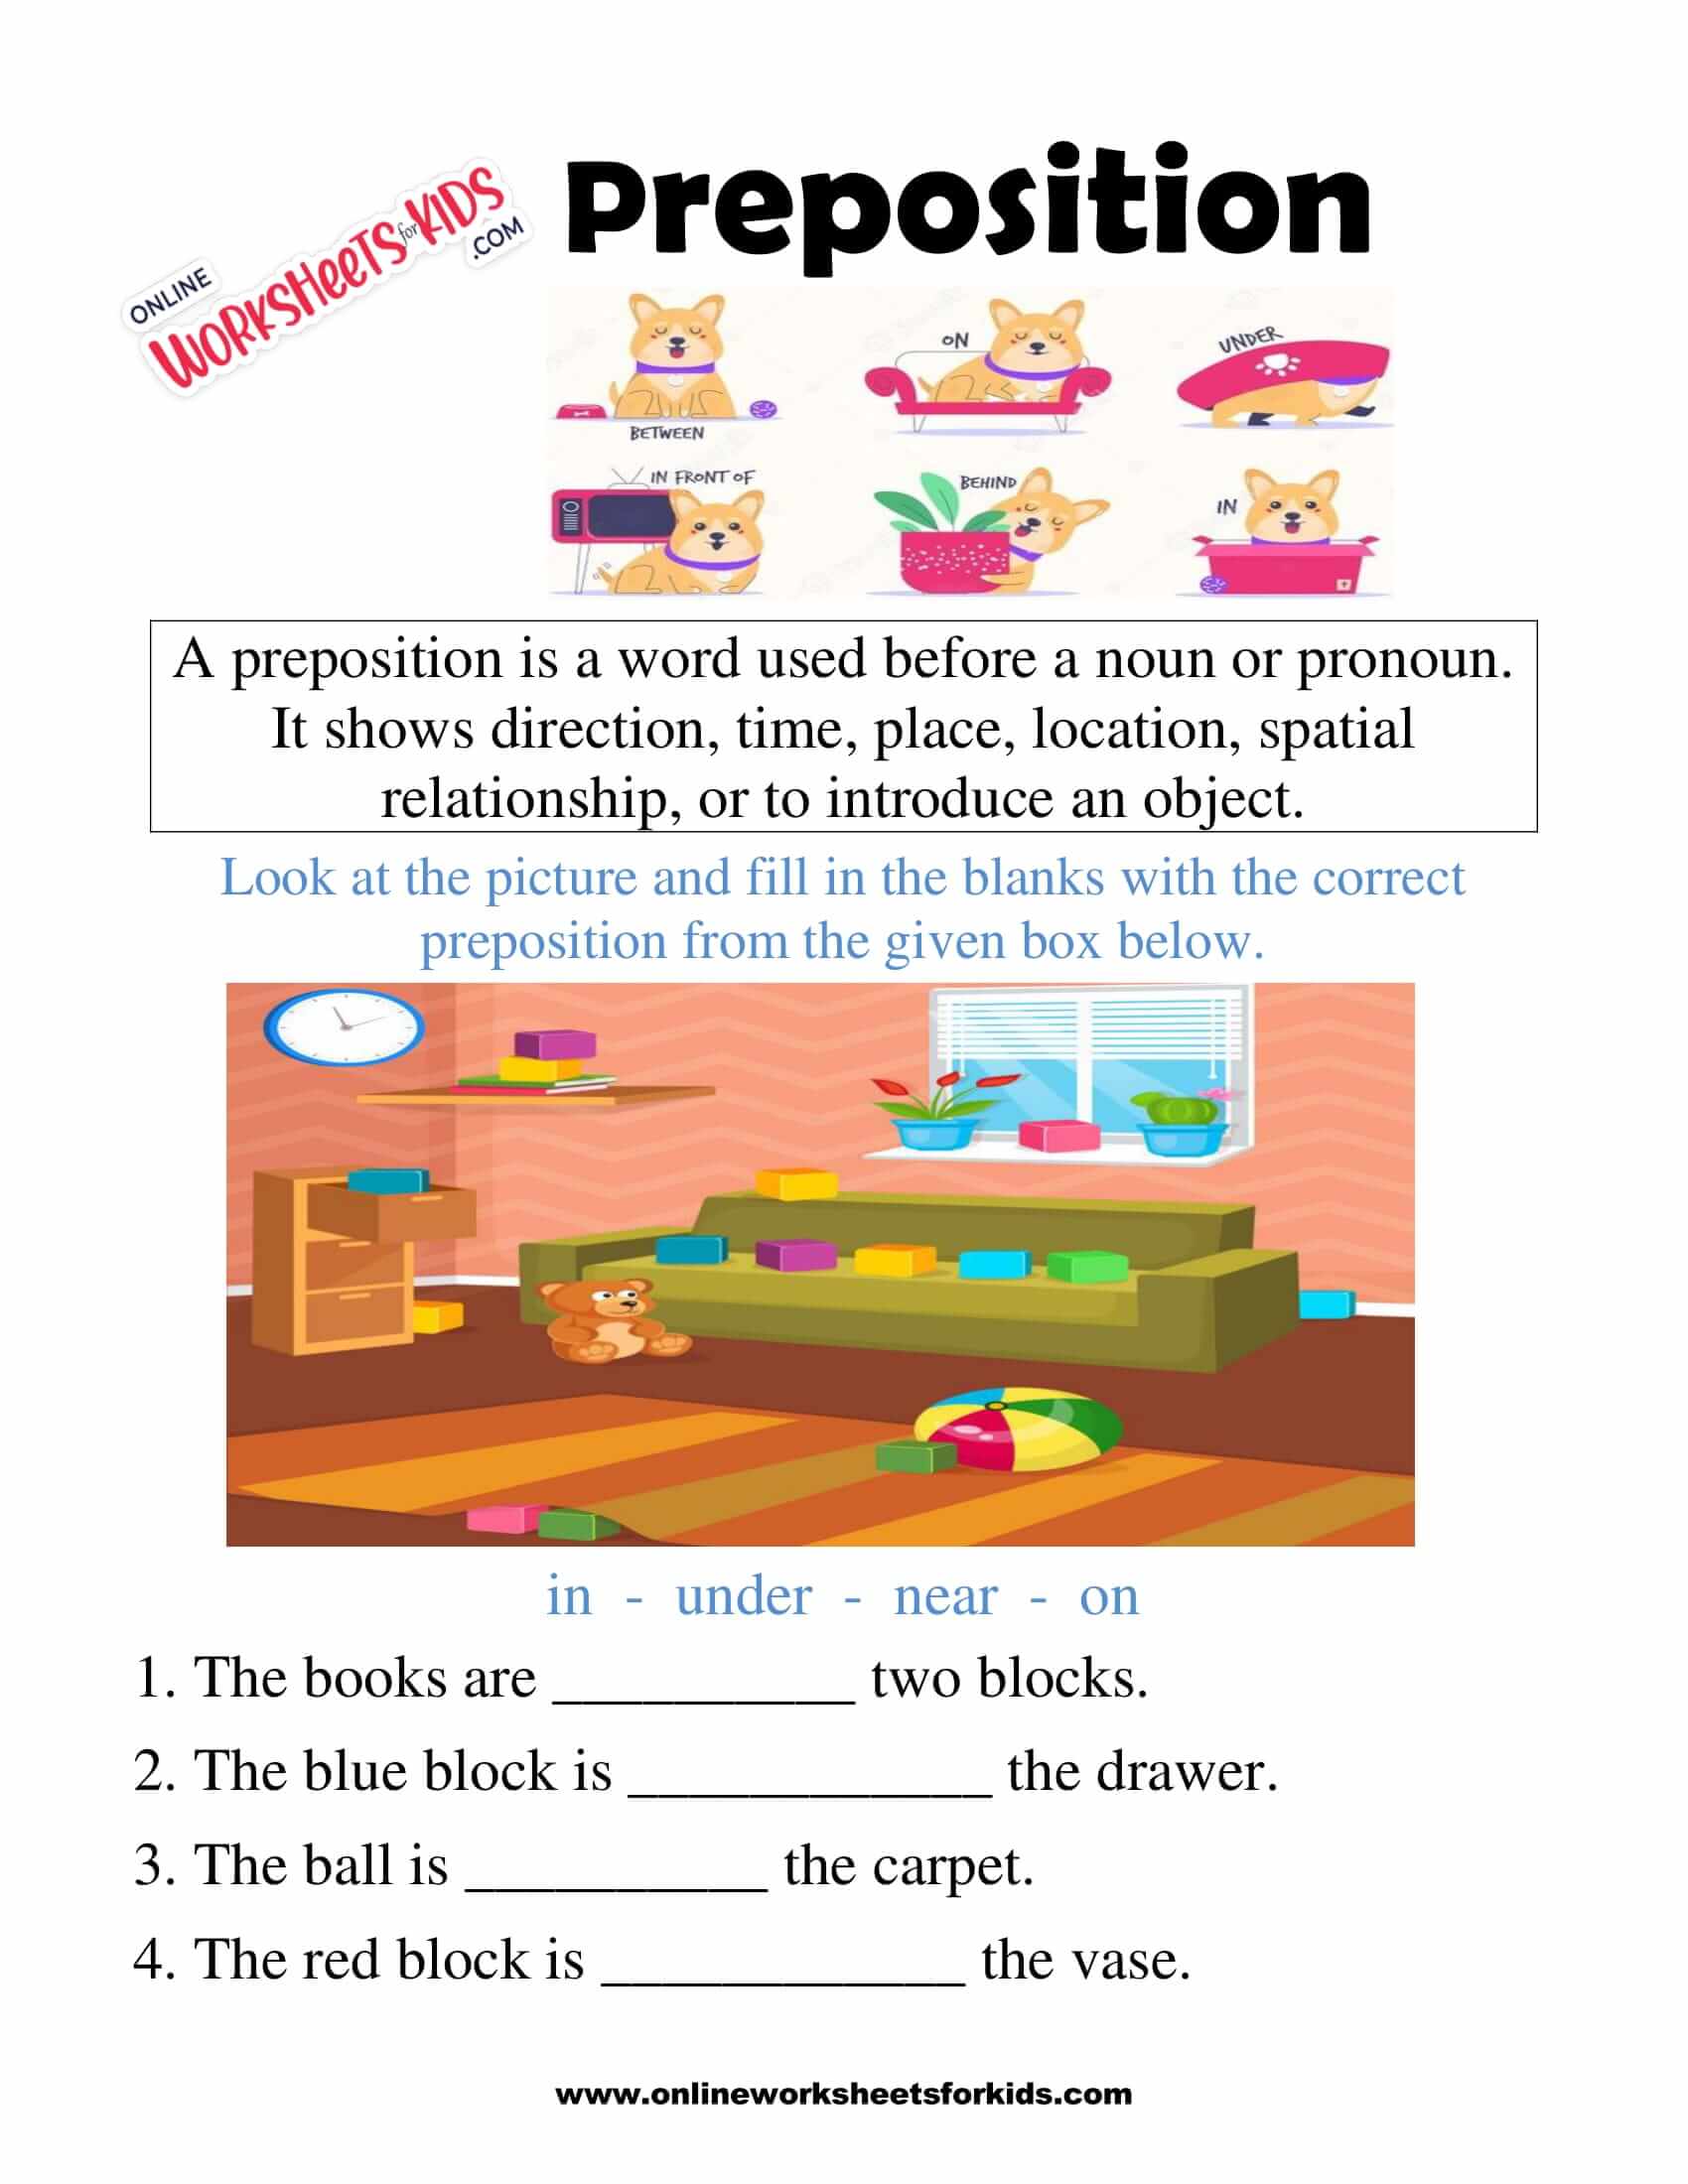 preposition-worksheets-for-grade-1-4